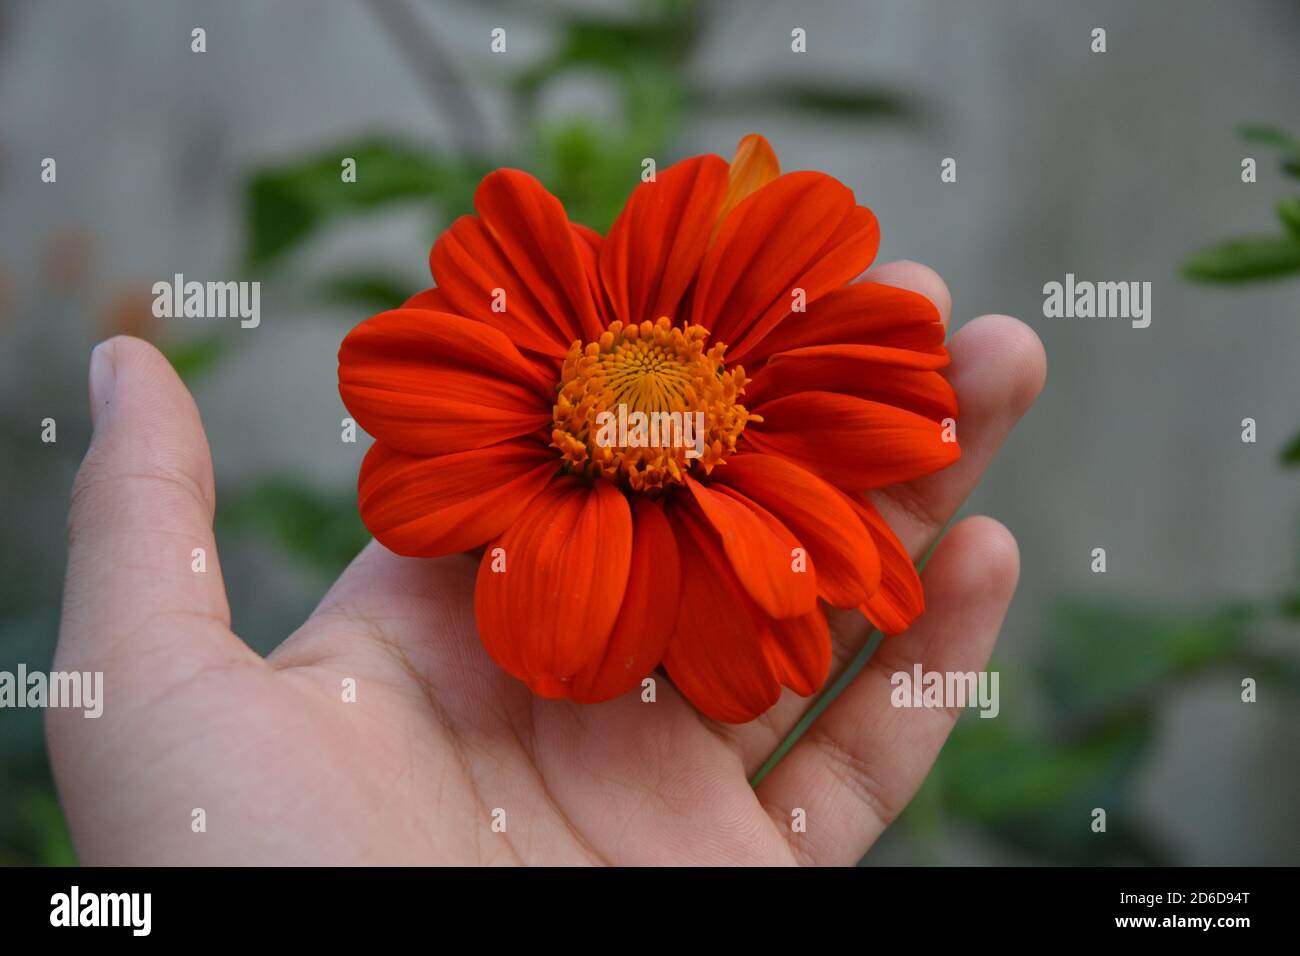 Rote Sonnenblume Bild. Stockfoto